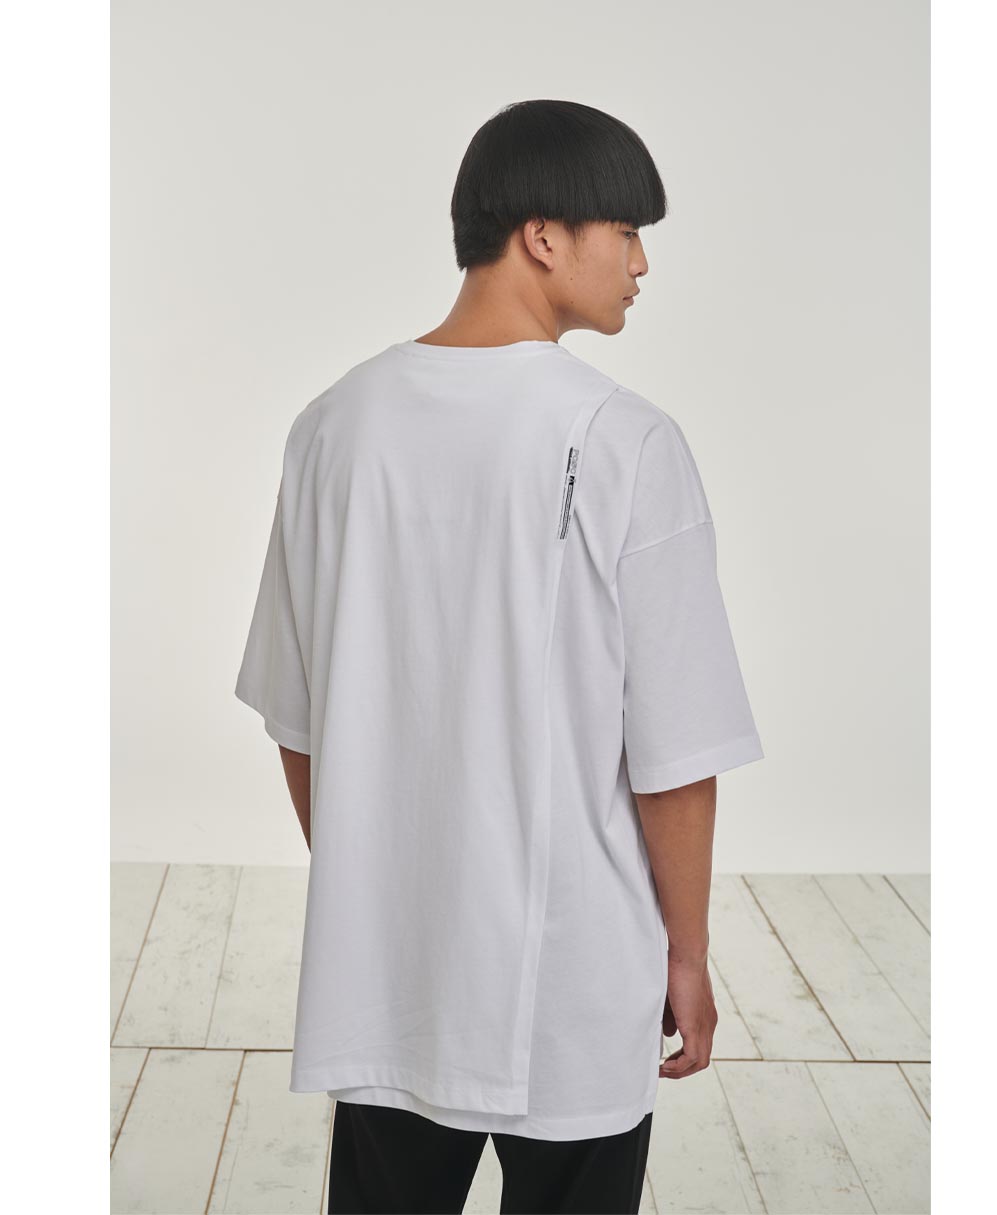 leyko oversized tshirt pcoc 1465